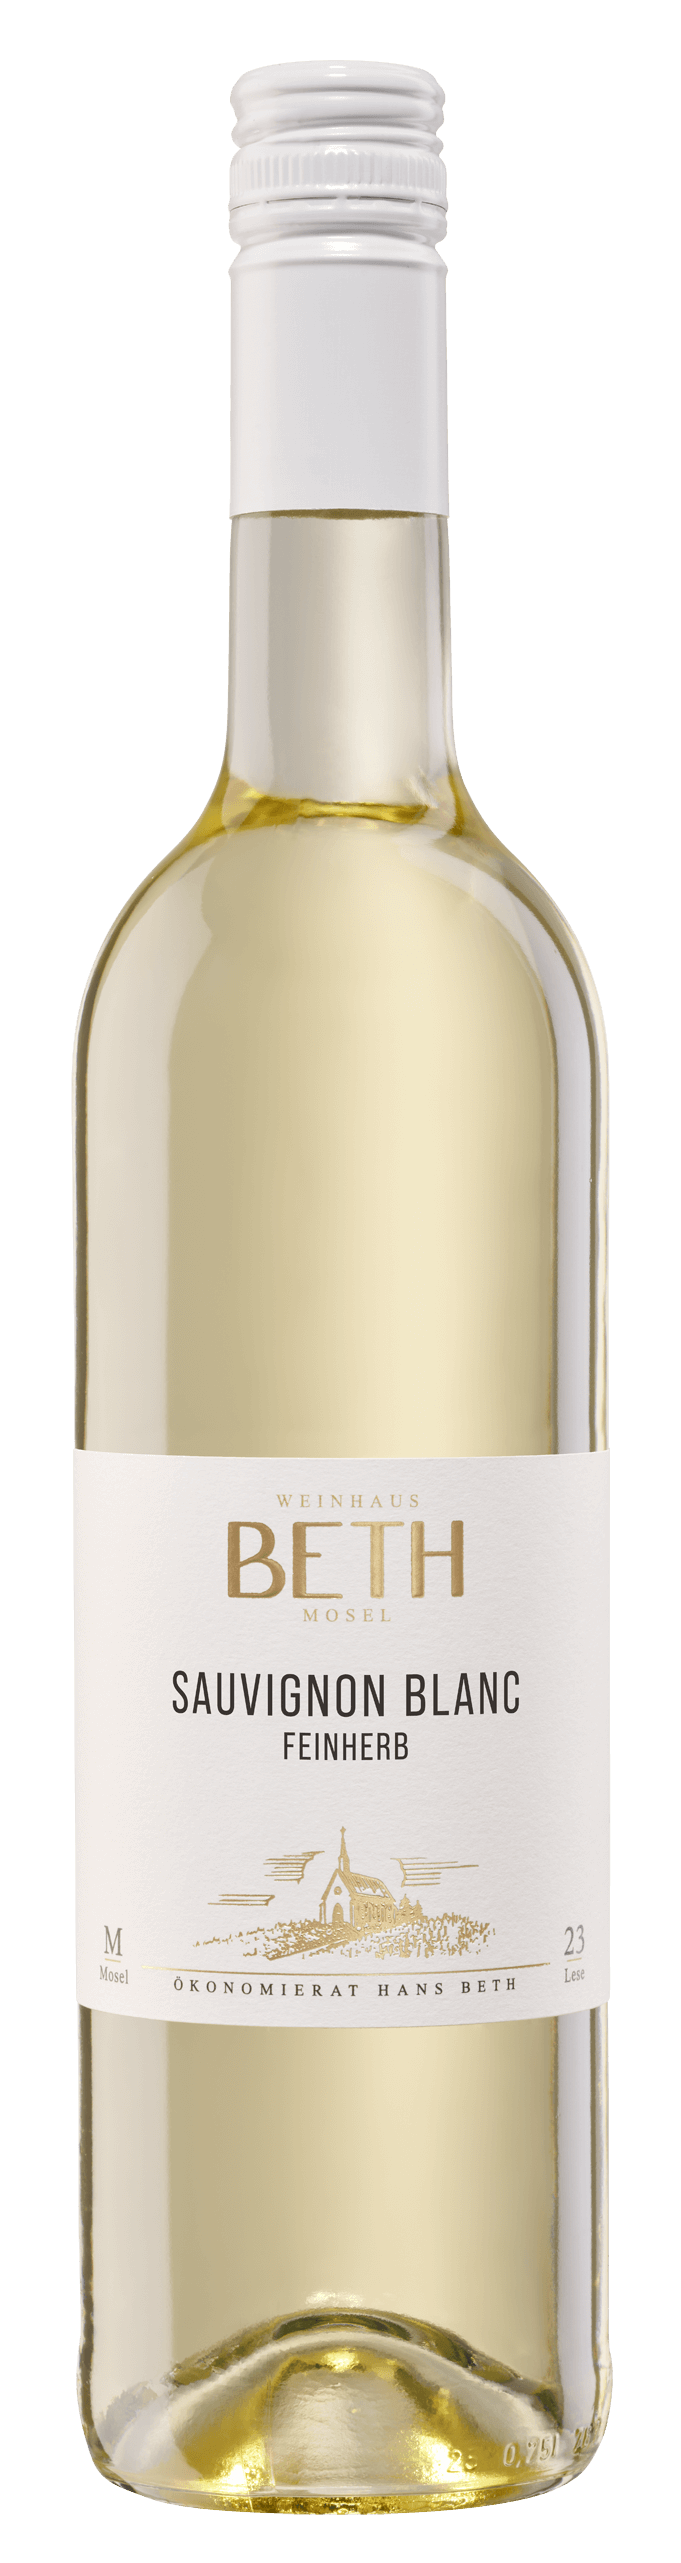 Sauvignon Blanc feinherb Kröv Weinhaus Beth Weingut Kröv Mosel